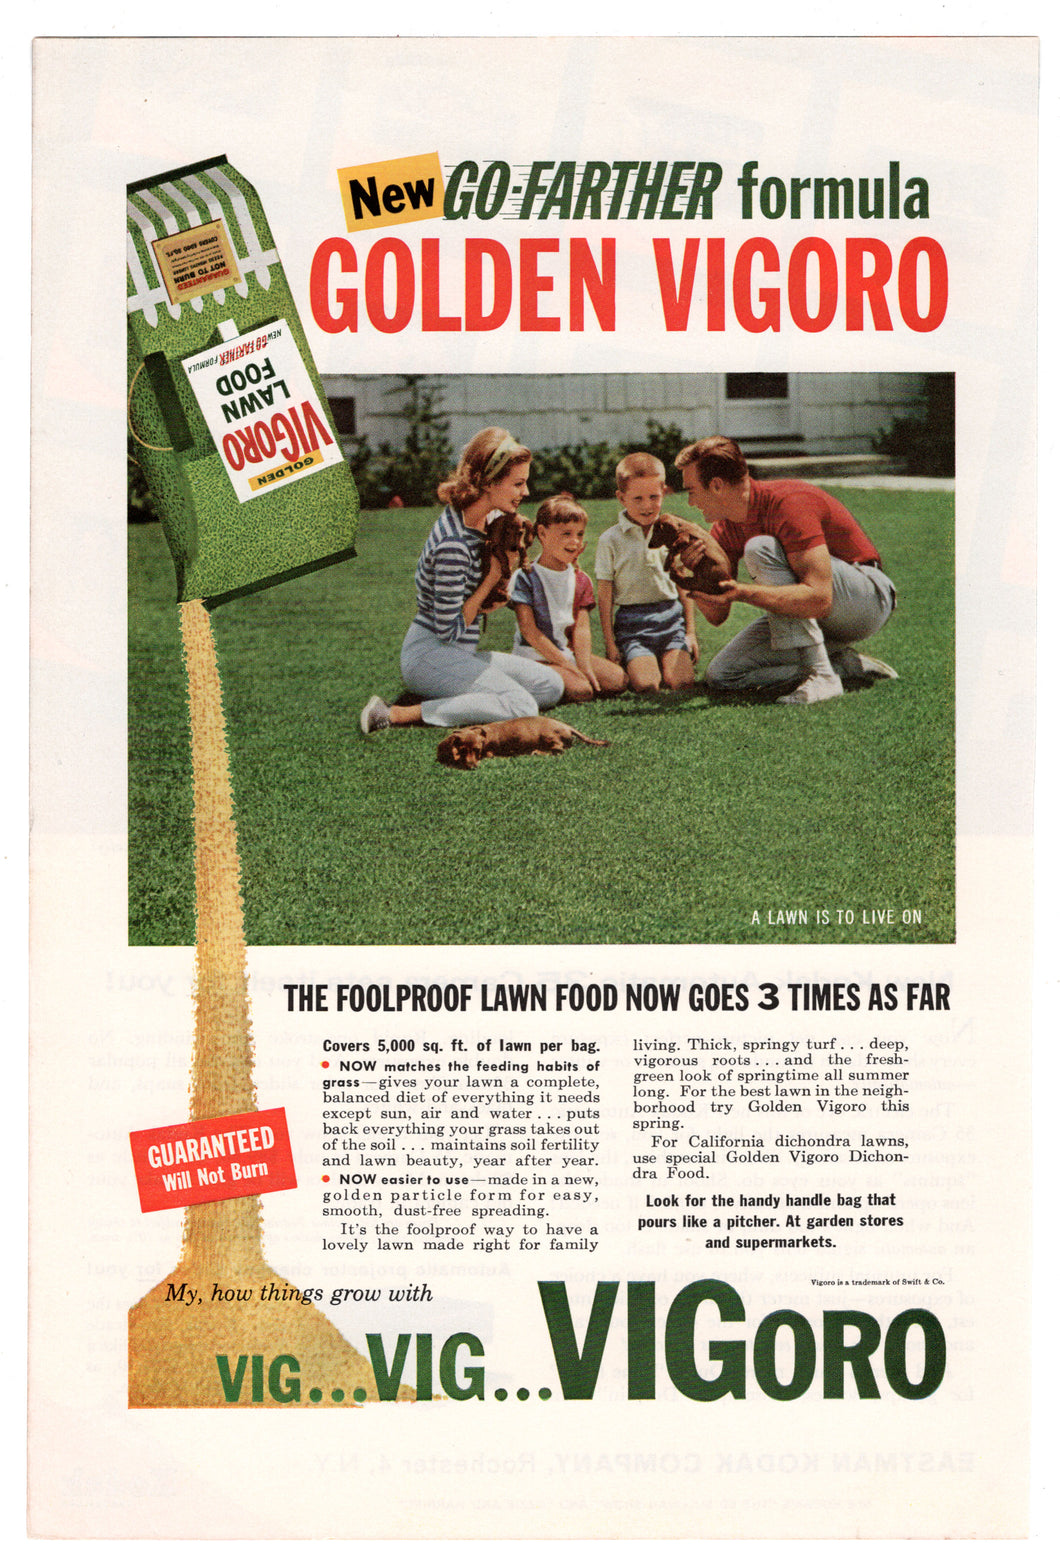 Golden Vigoro Lawn Food Vintage Ad (New GO-FARTHER Formula) # 275 - 1960's